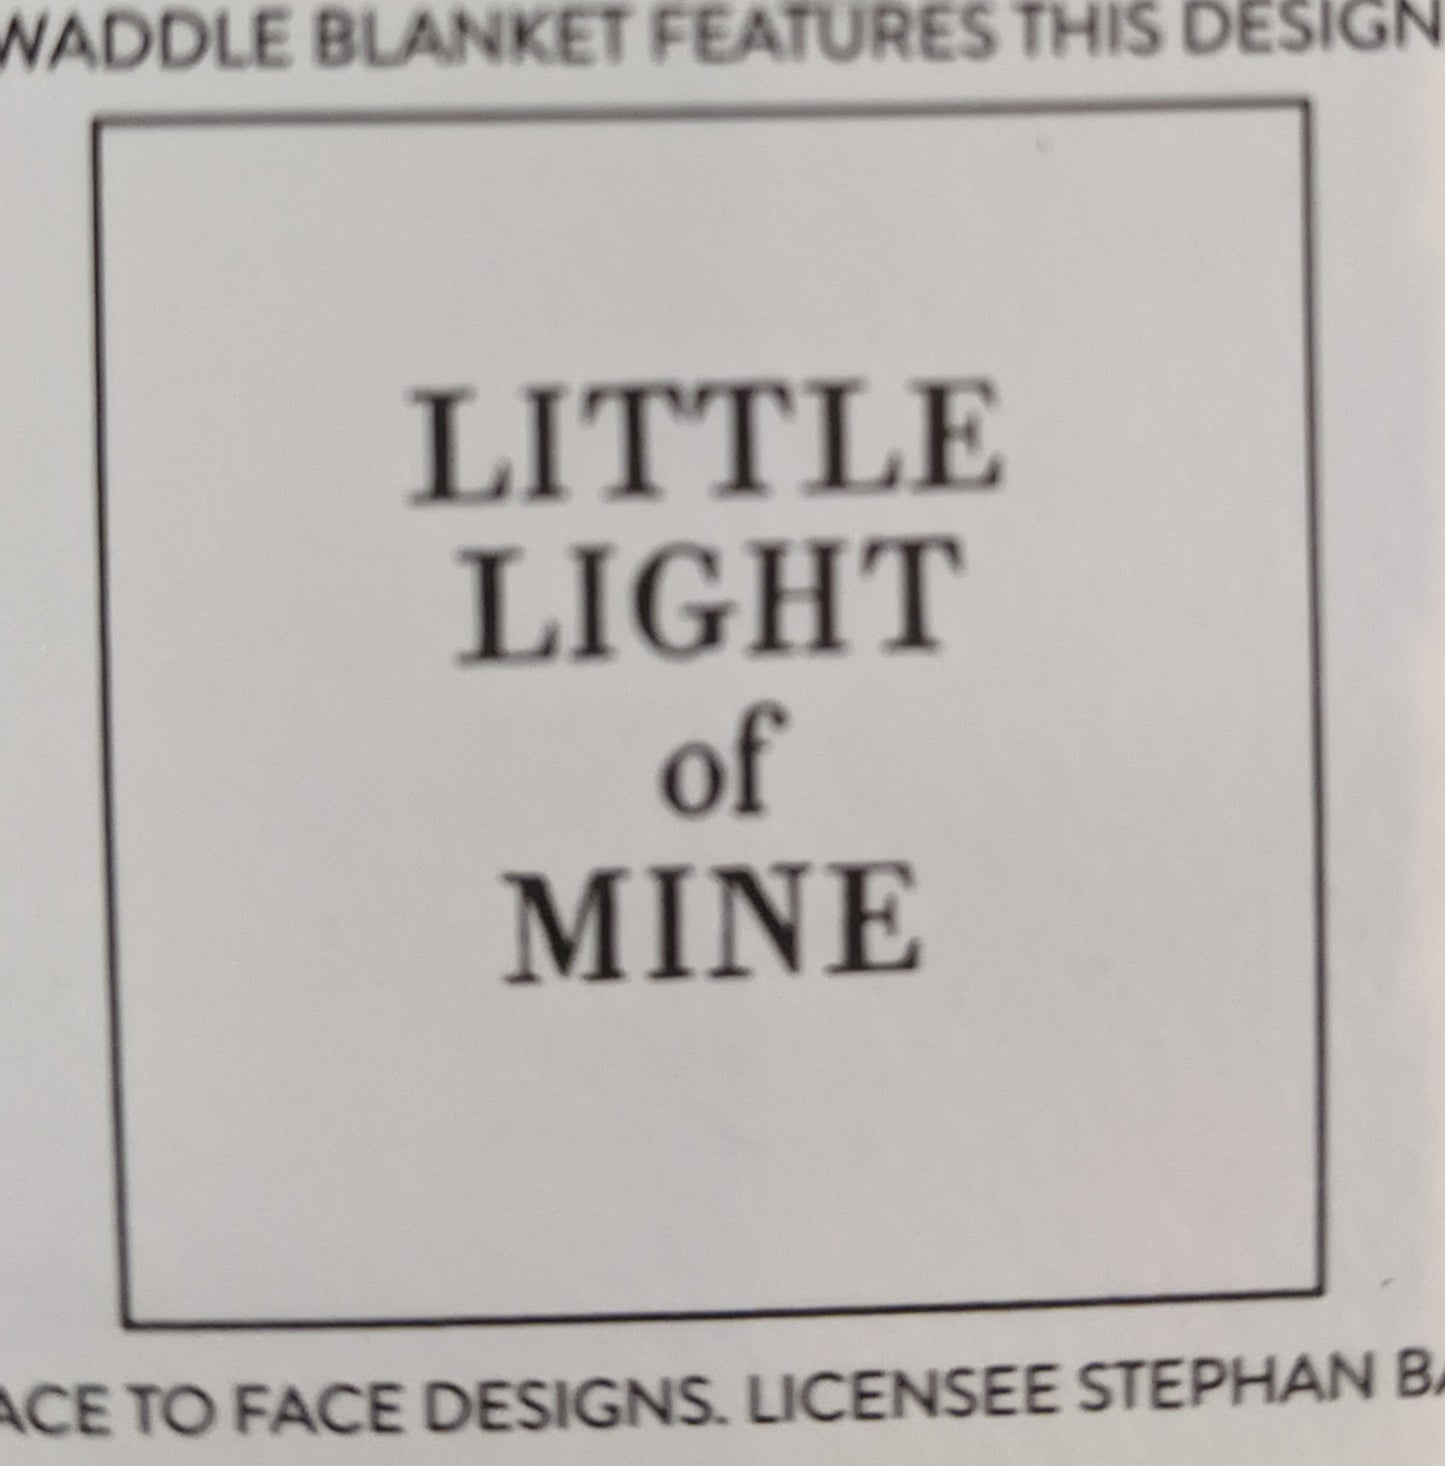 Swaddle - Little Light of Mine